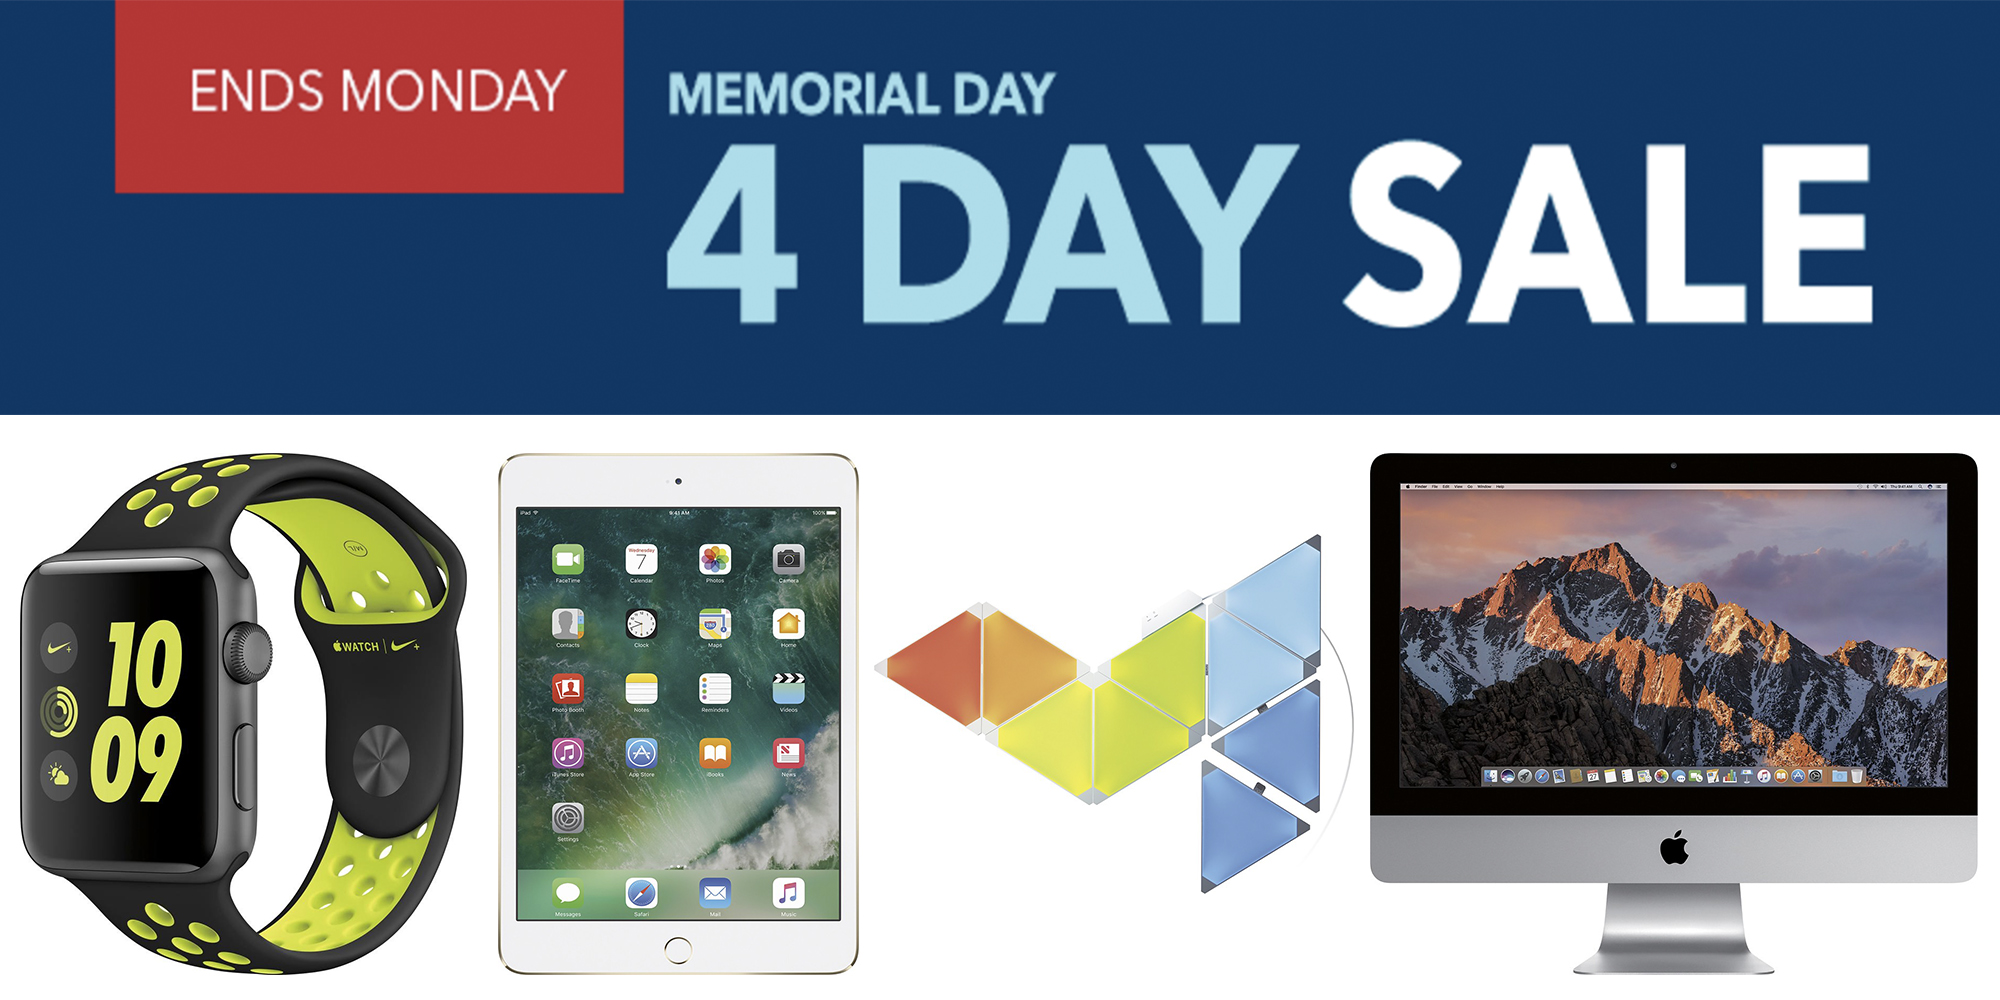 Best Buy Memorial Day Sale 70 off Apple Watch Series 2, iPad mini 4